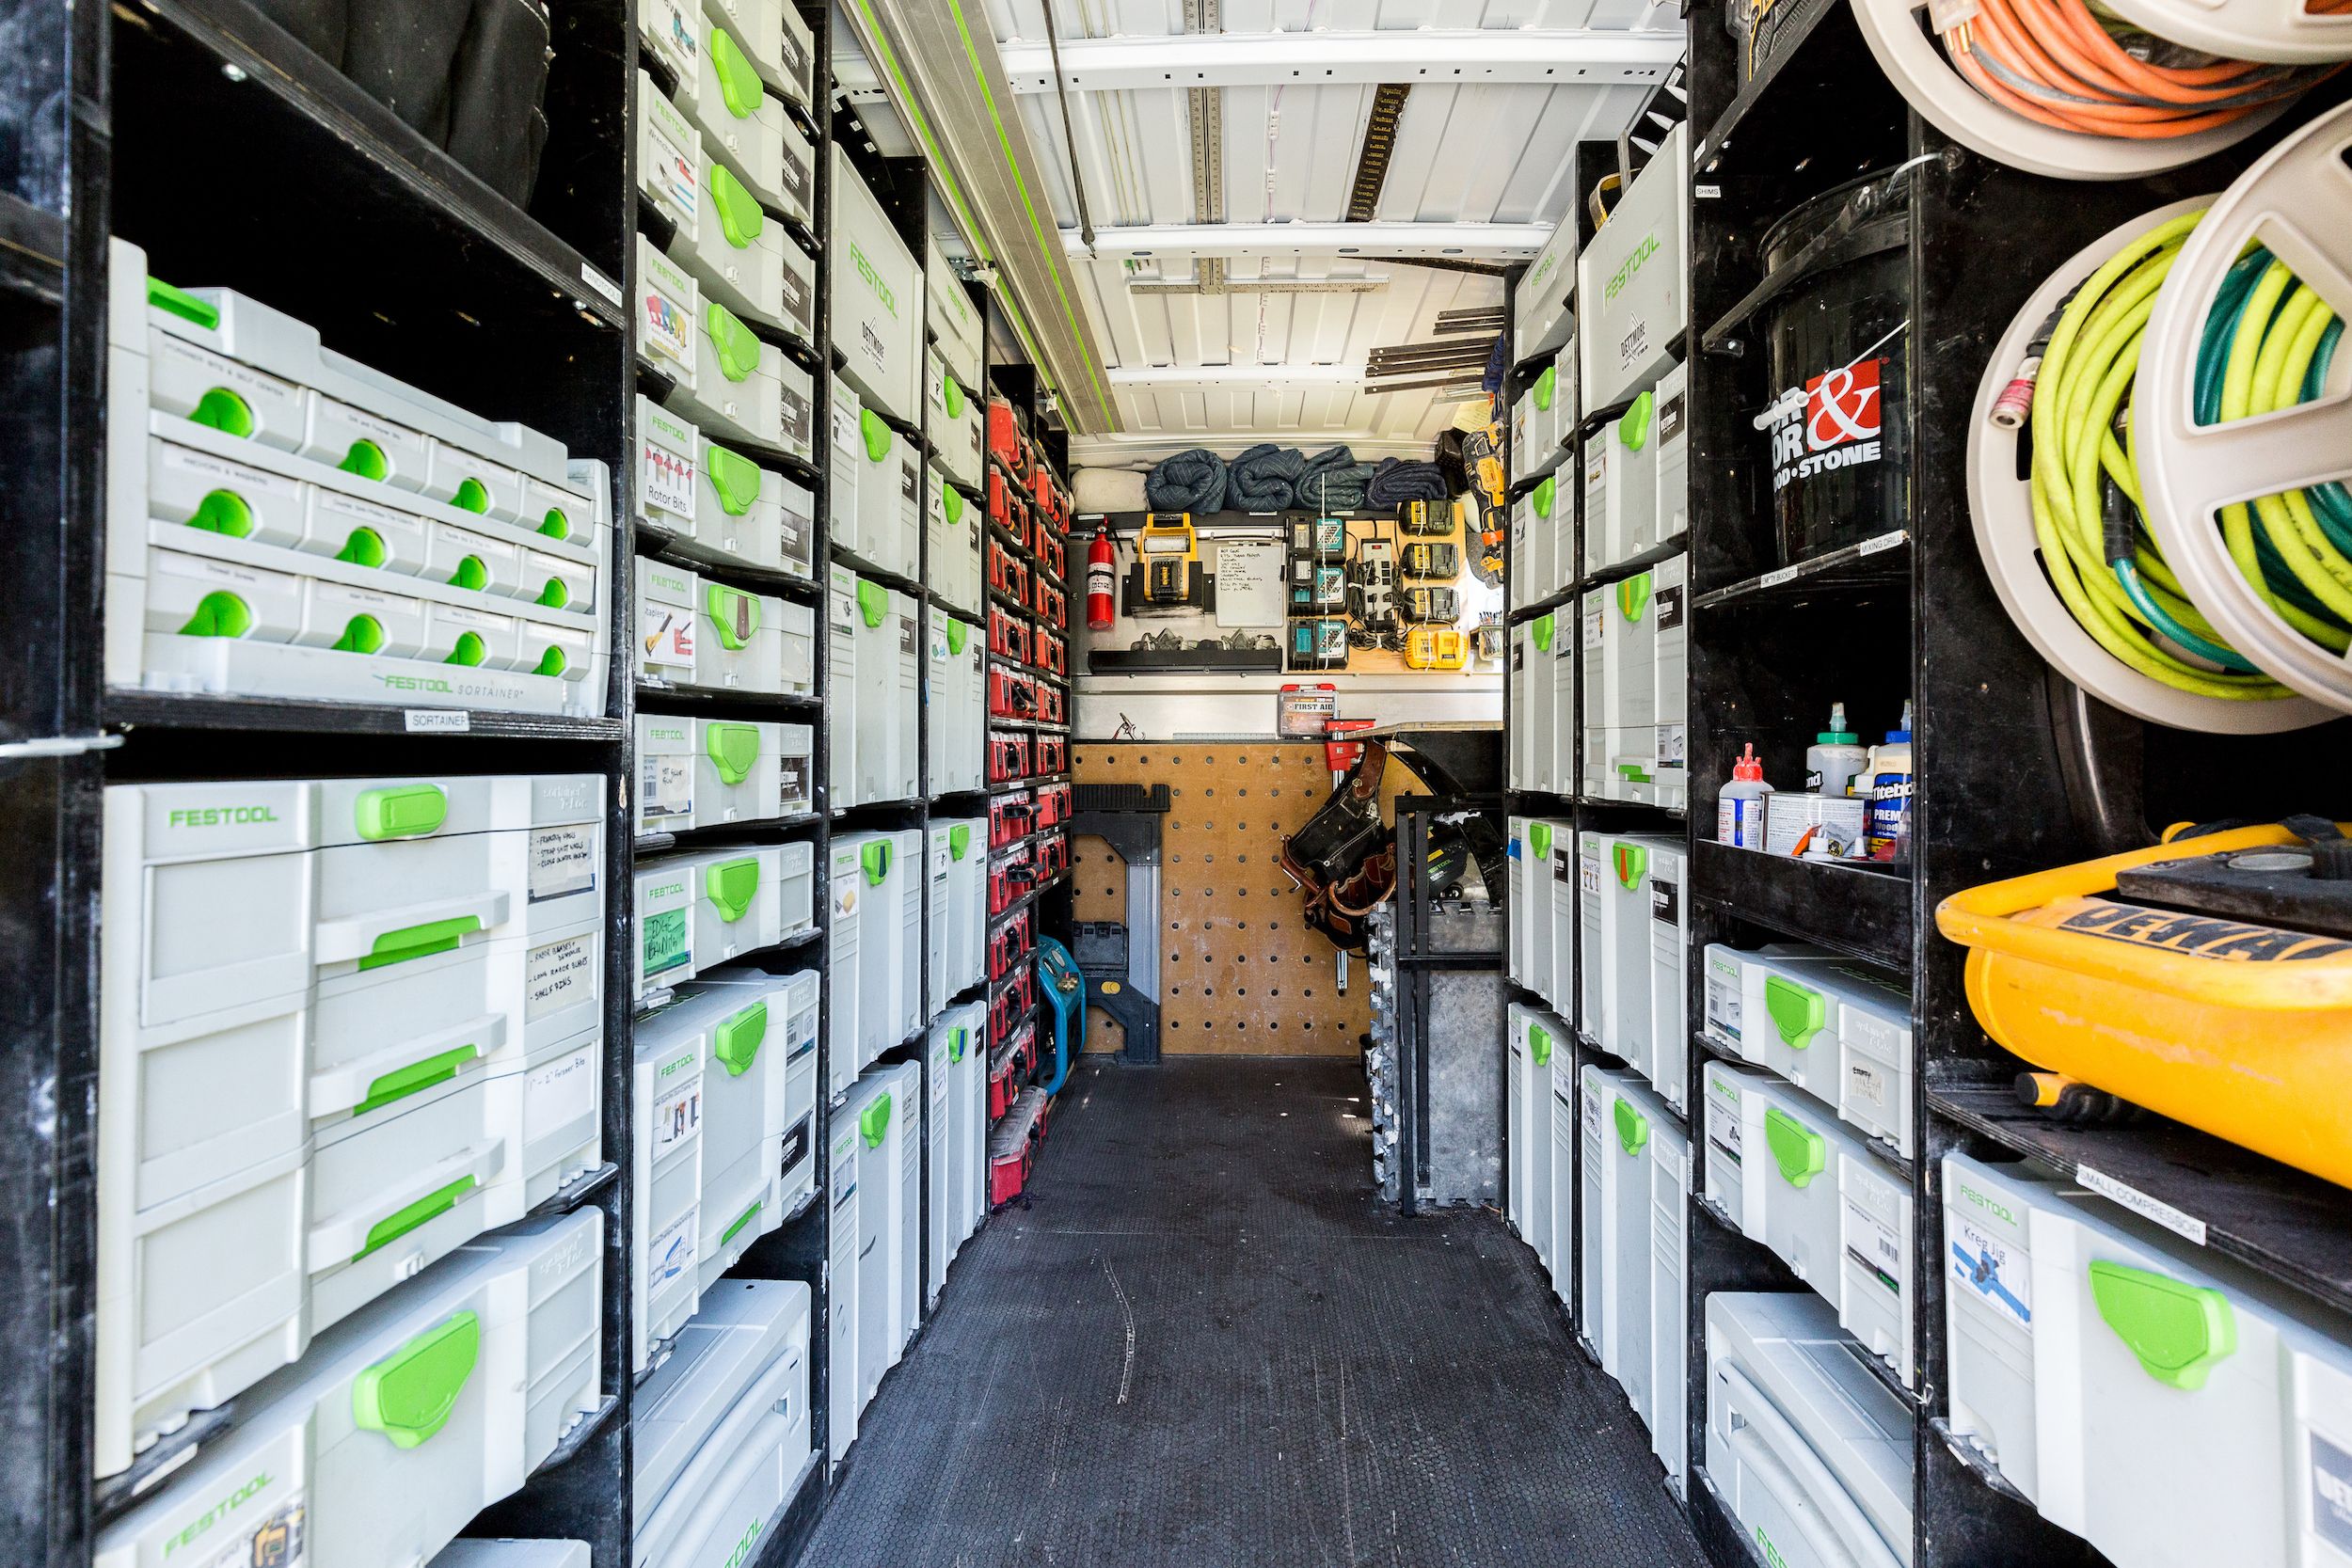 Work Van Shelving – Get Organized and Efficient - Concord Carpenter